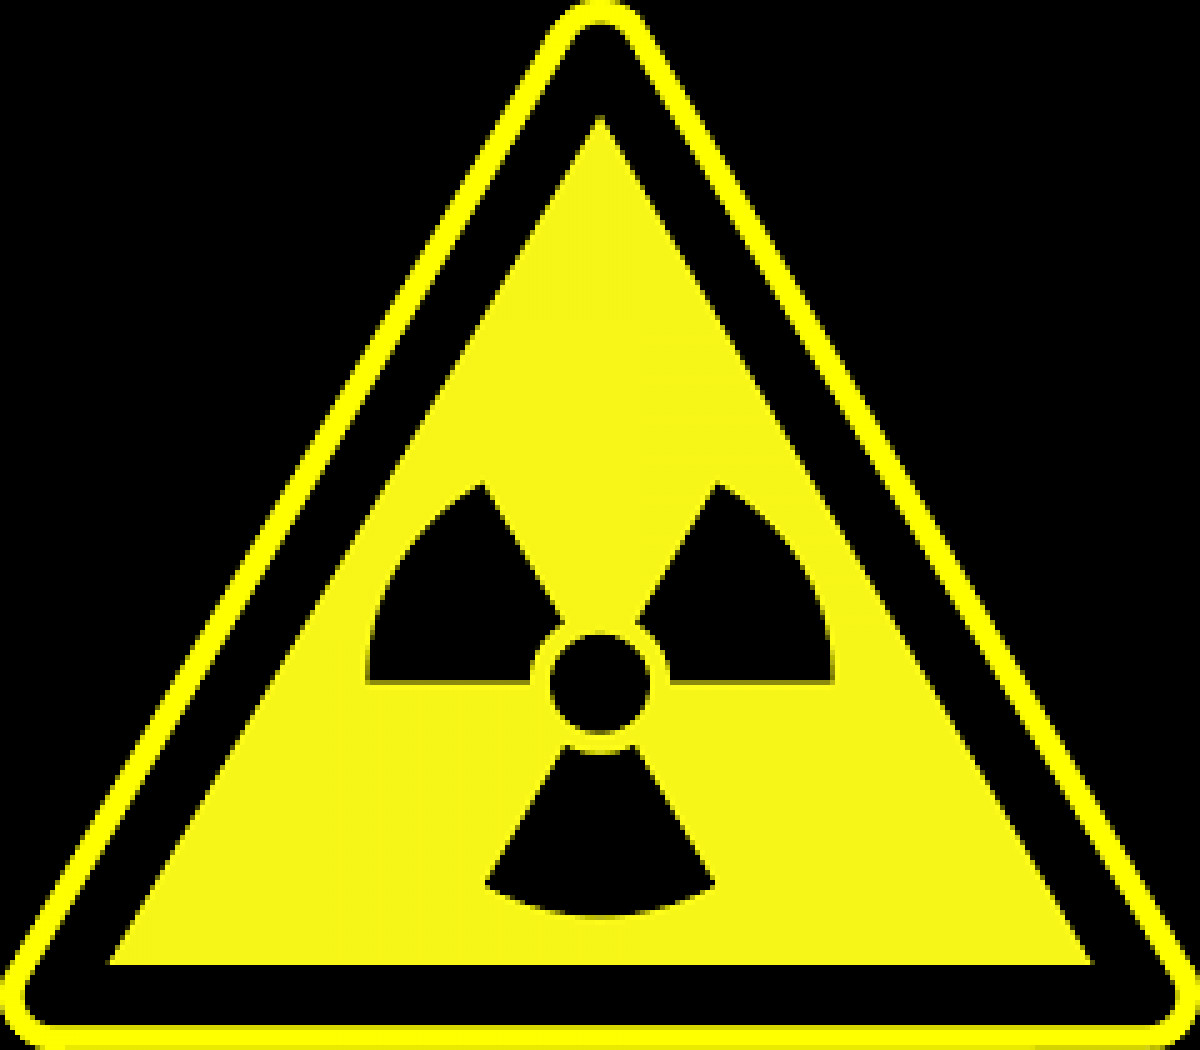 Nexxus Project - Radioactive decontamination